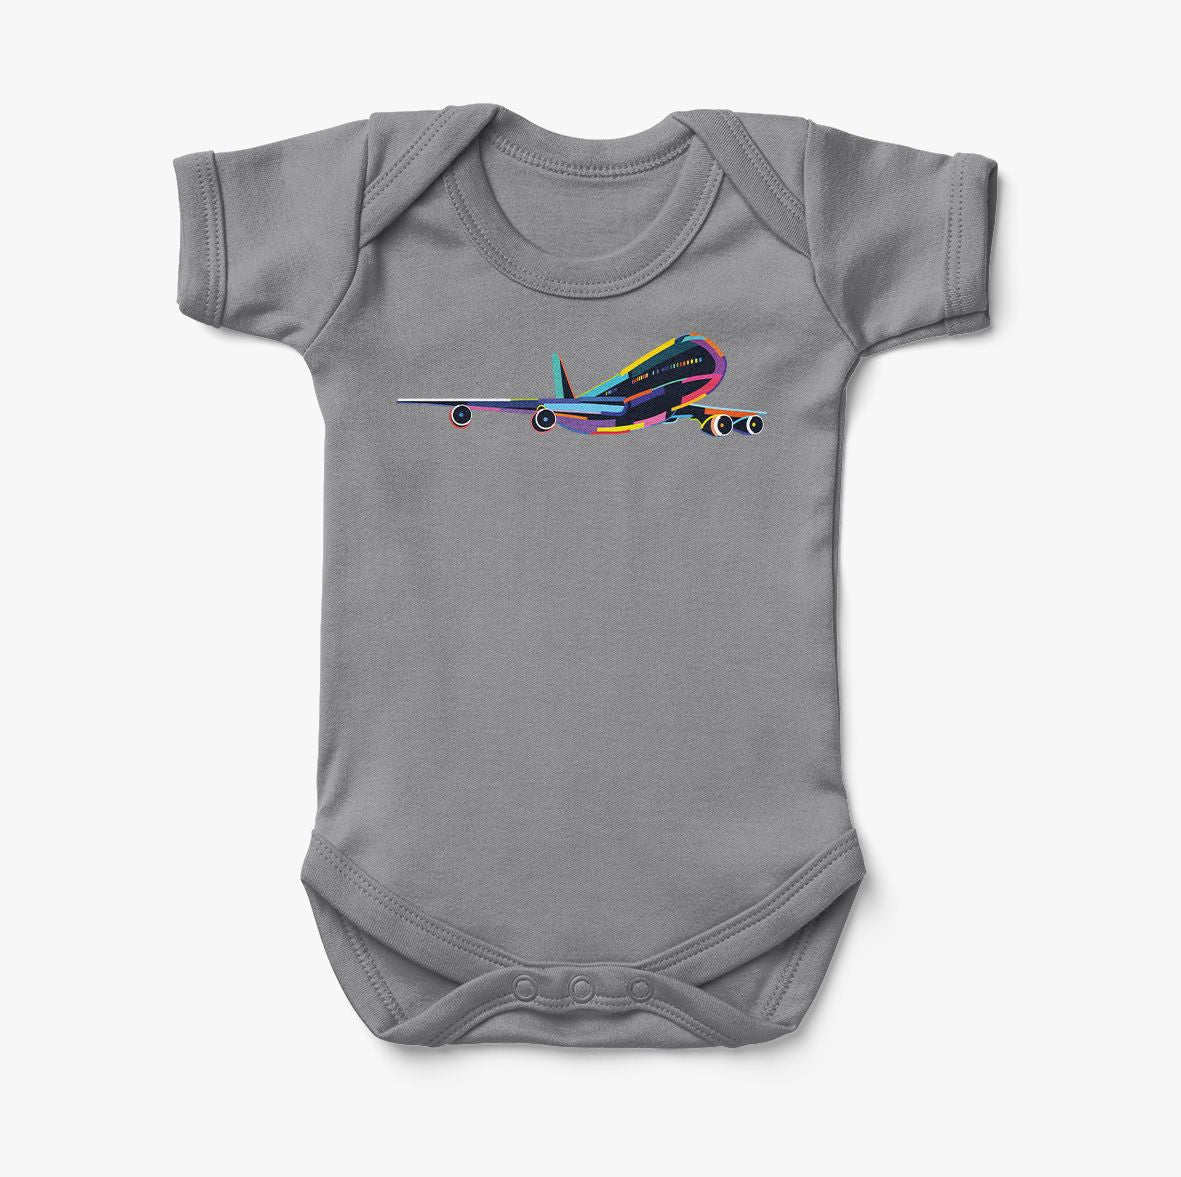 Multicolor Airplane Designed Baby Bodysuits